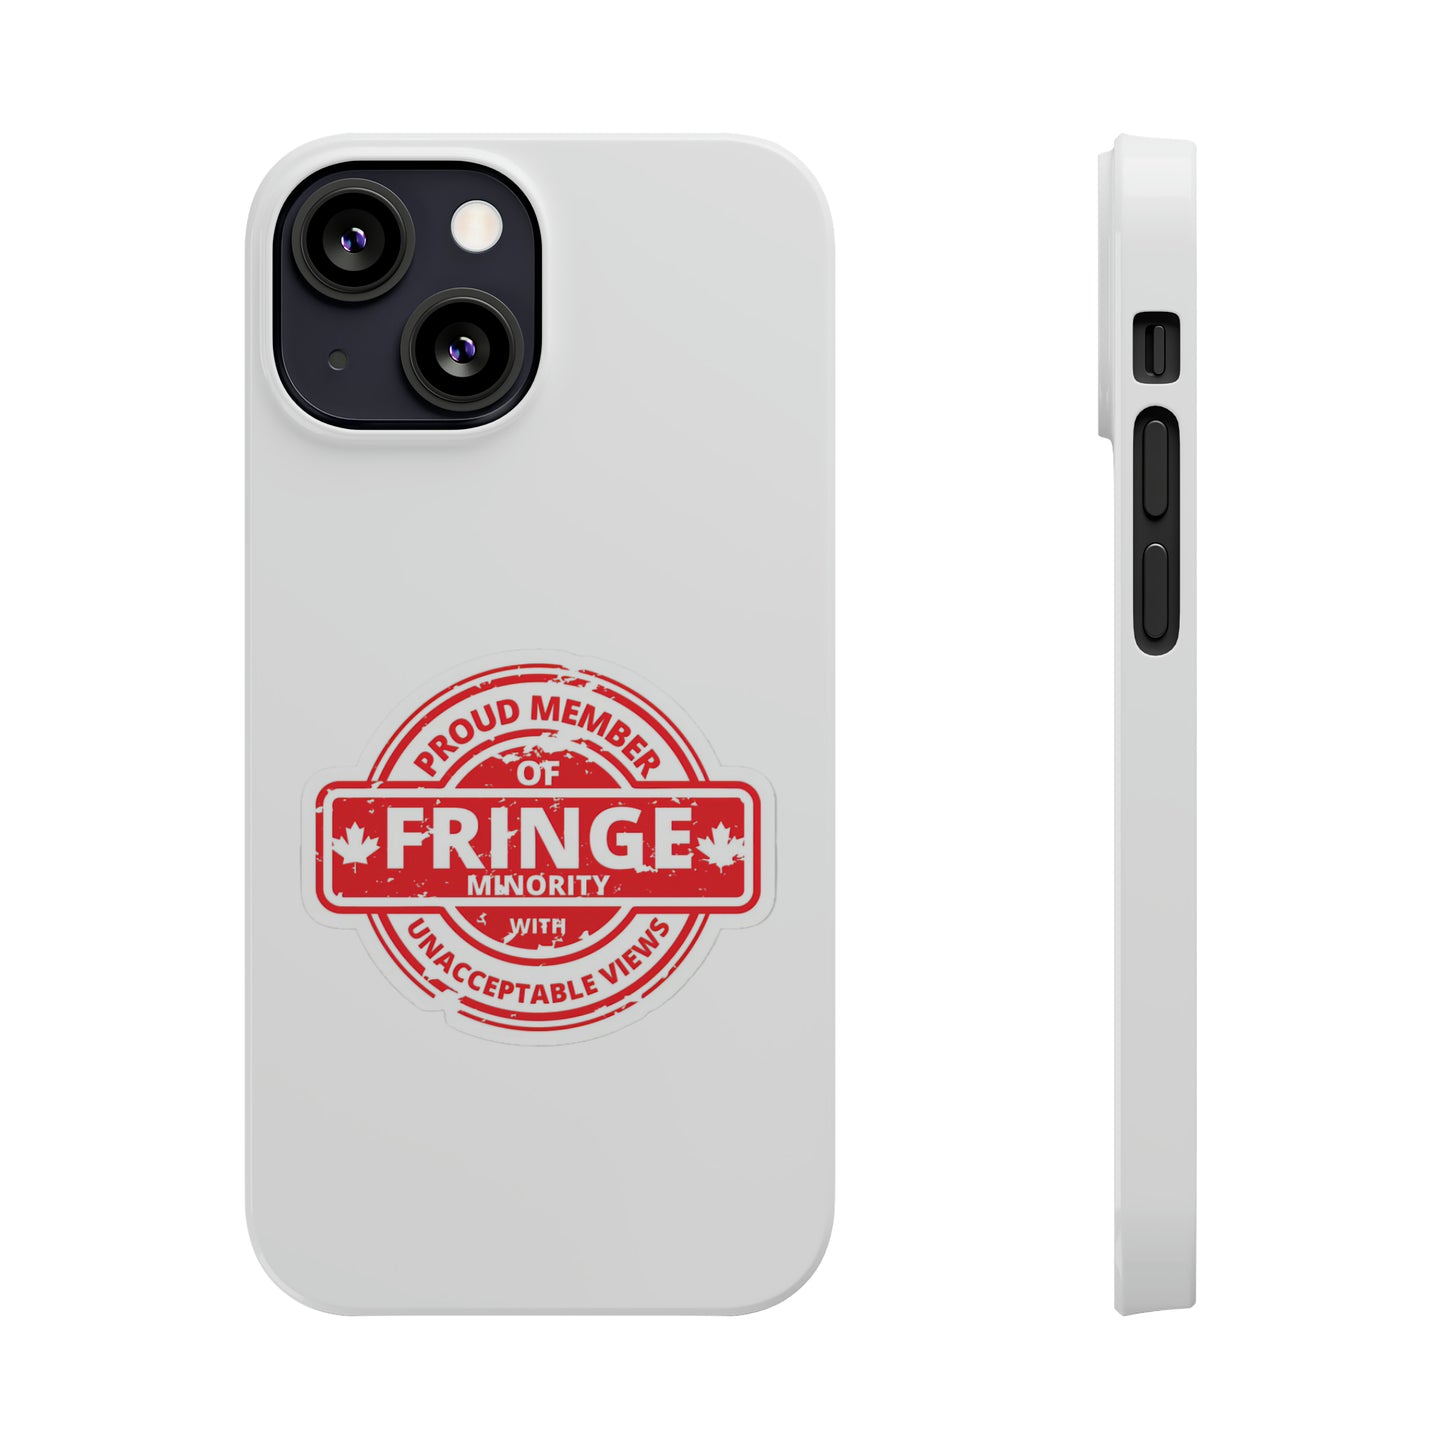 Fringe Minority iPhone Slim Phone Cases